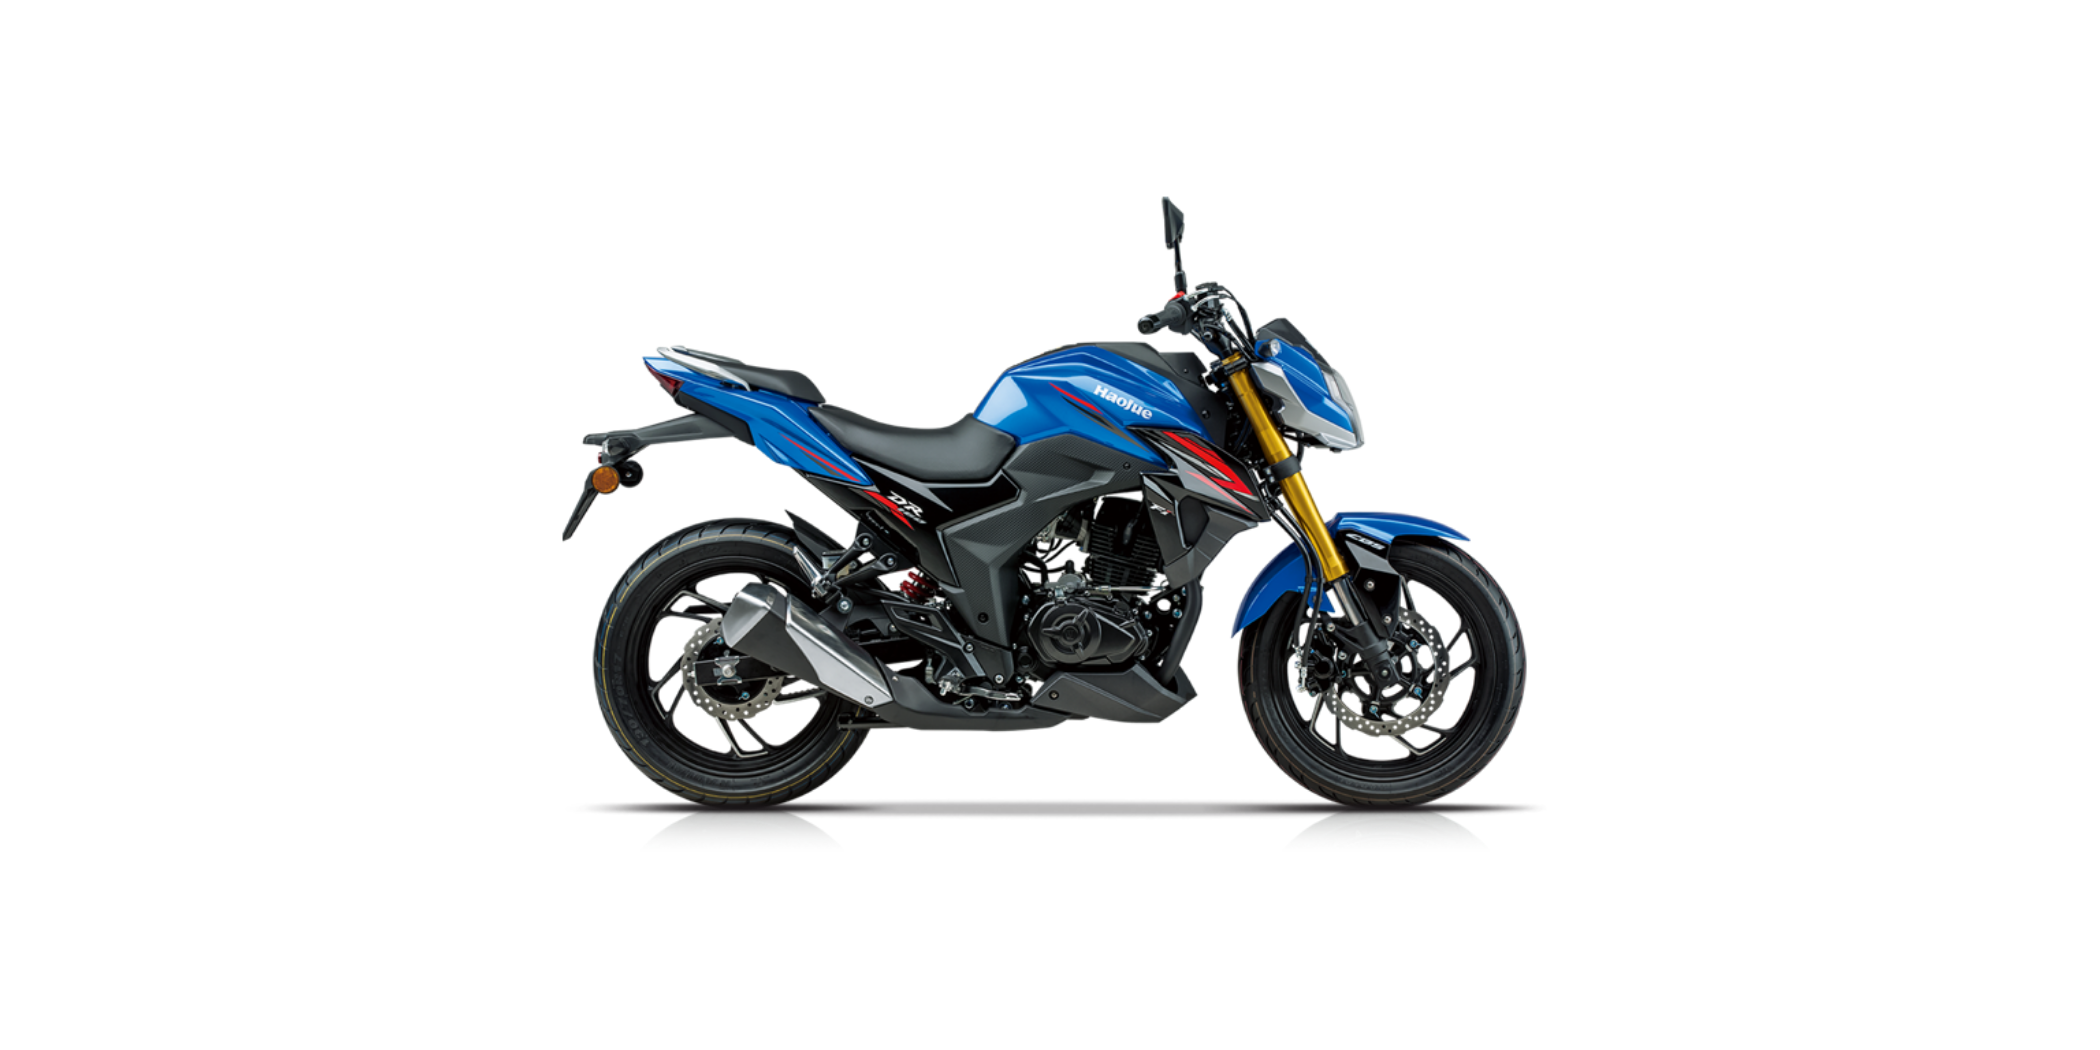 Haojue DR160 Blue/Black Motorbike